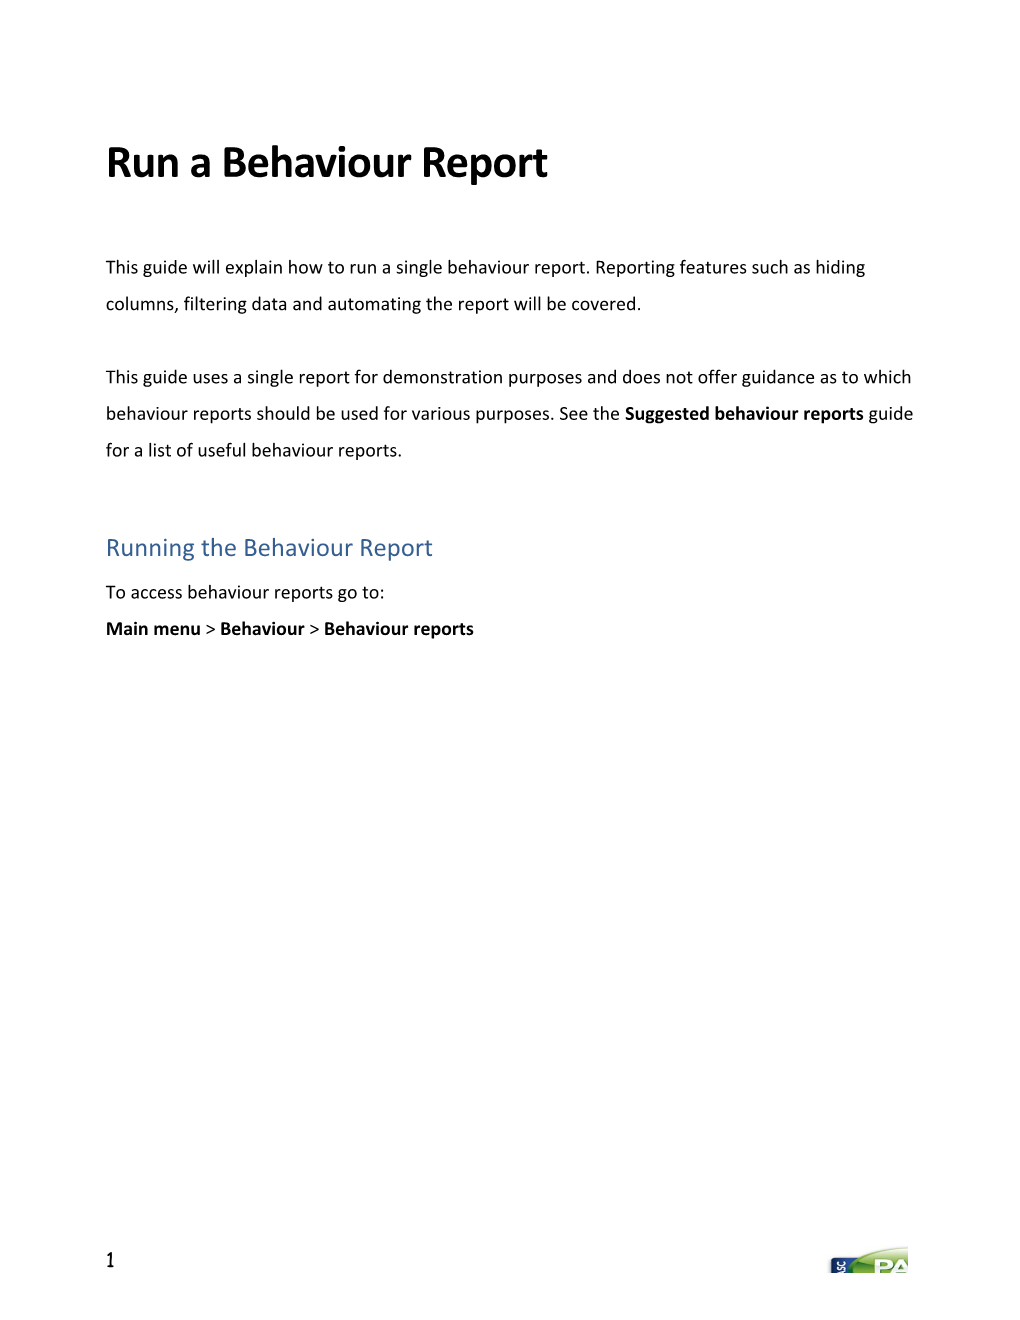 Running the Behaviour Report